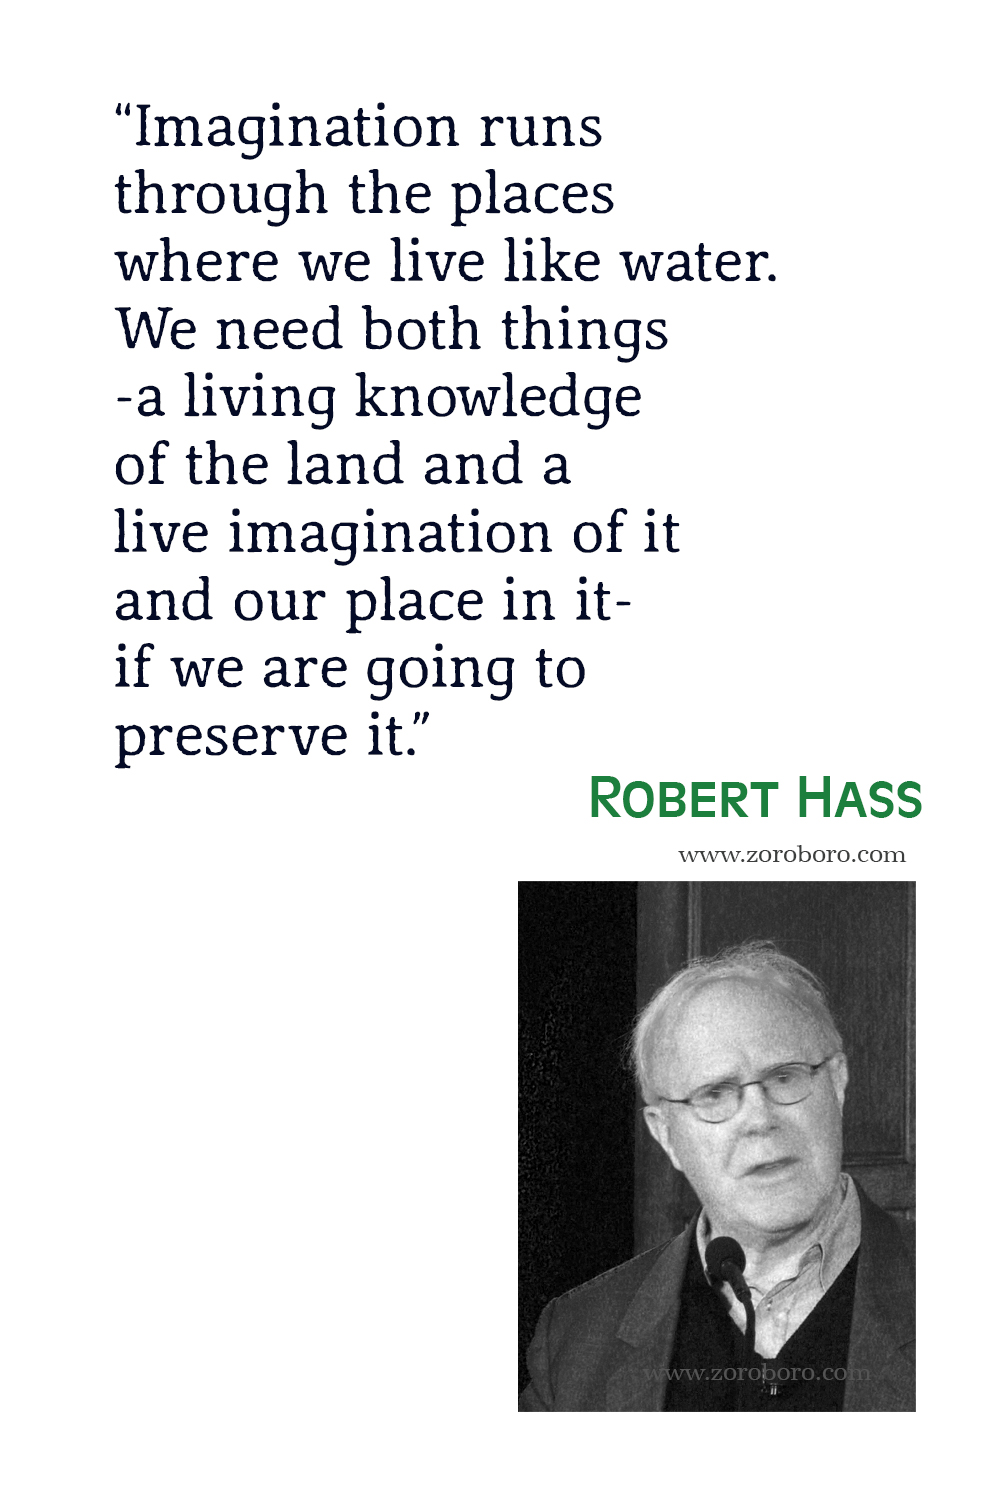 Robert Hass Quotes, Robert Hass Praise Quotes, Selected Haiku by Robert Hass, Robert Hass Poems, Robert Hass Poetry, Robert Hass .